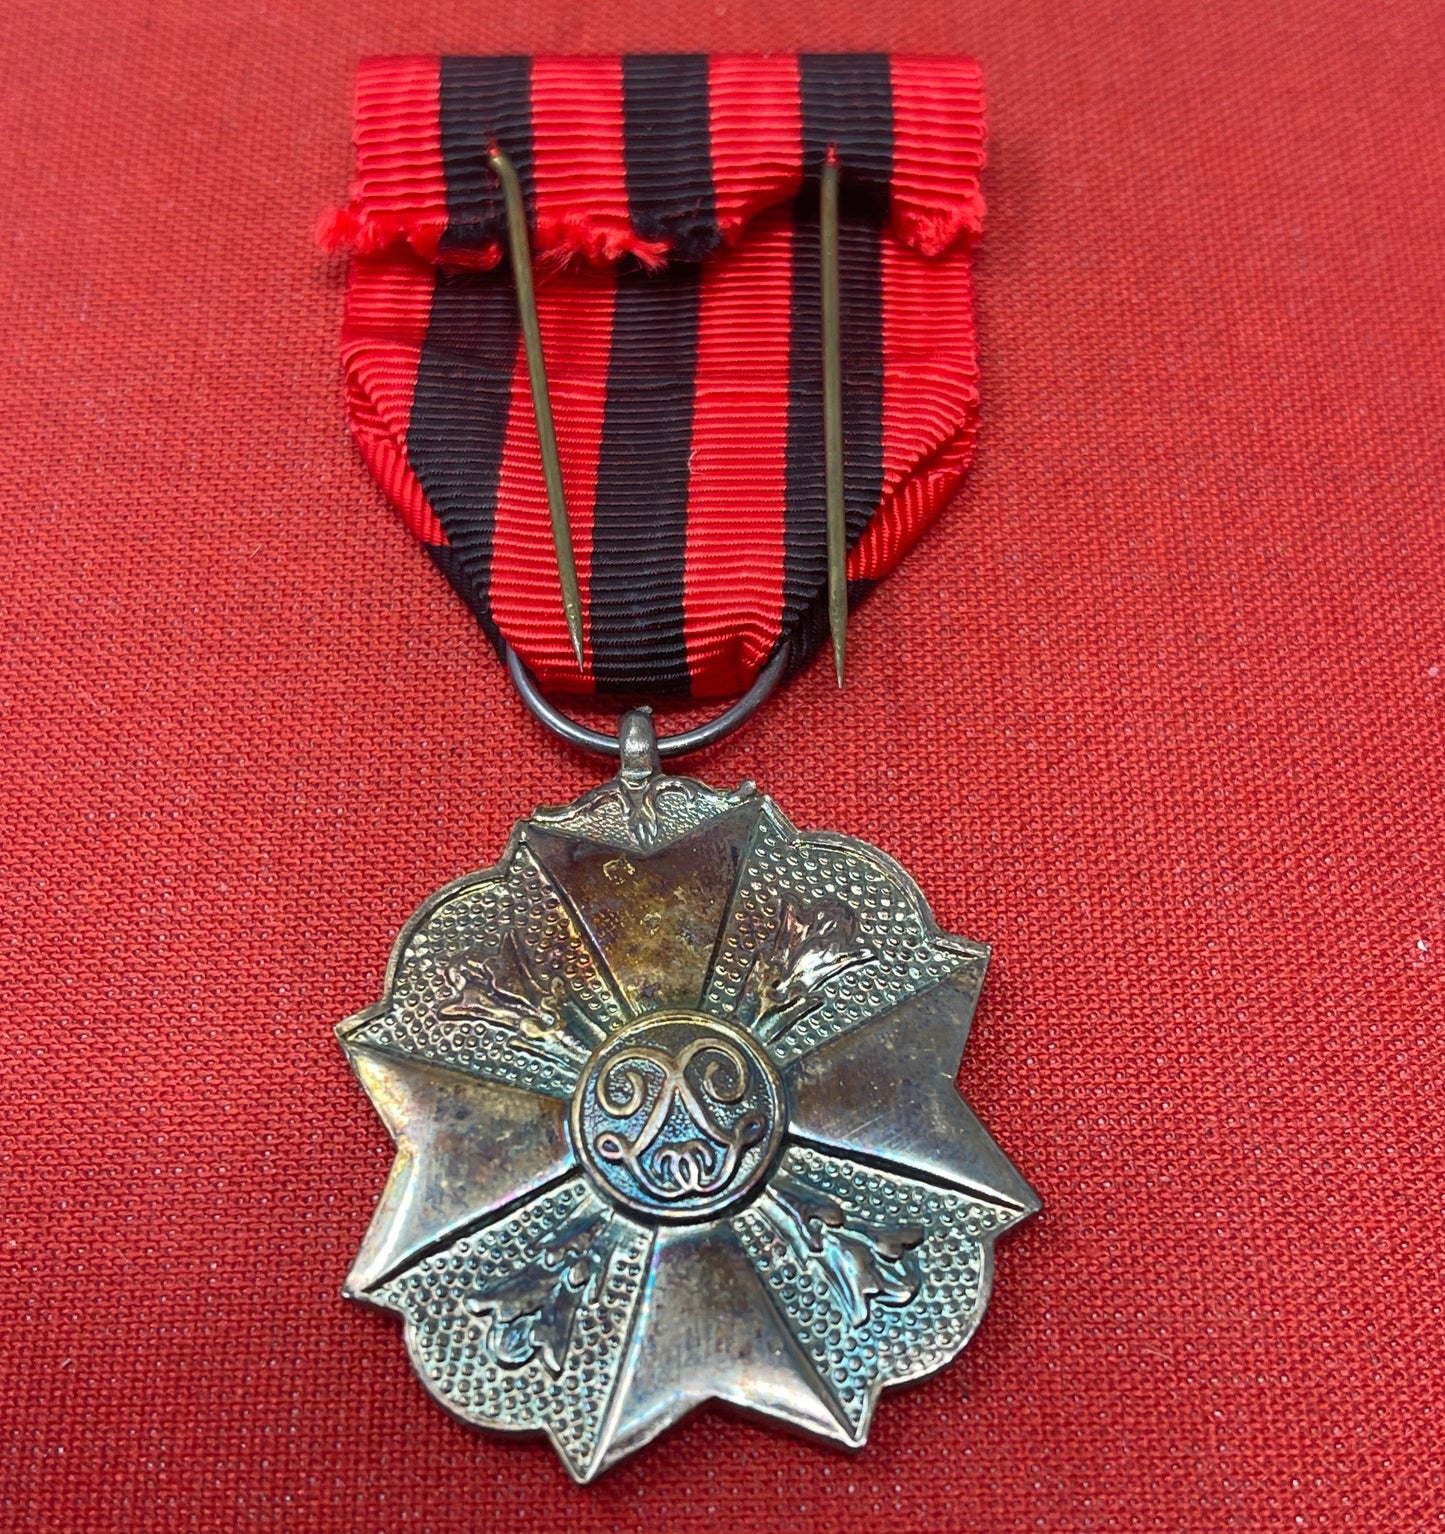 Belgian Civil Decoration for Bravery, Devotion and Philanthropy medal